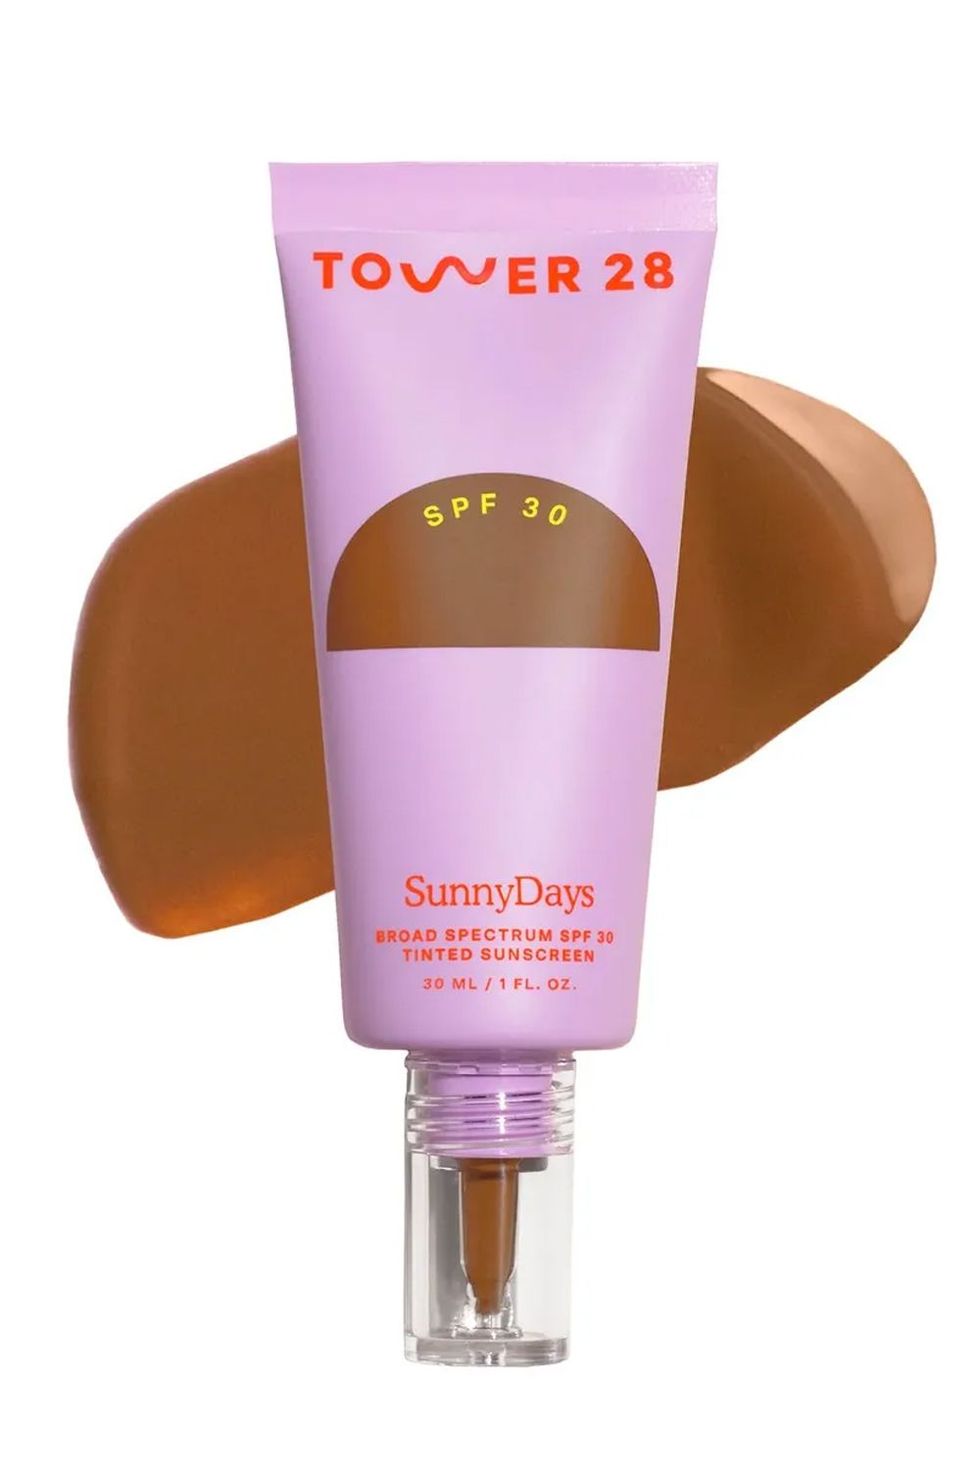 Tower 28 SunnyDays SPF 30 Tinted Sunscreen Foundation